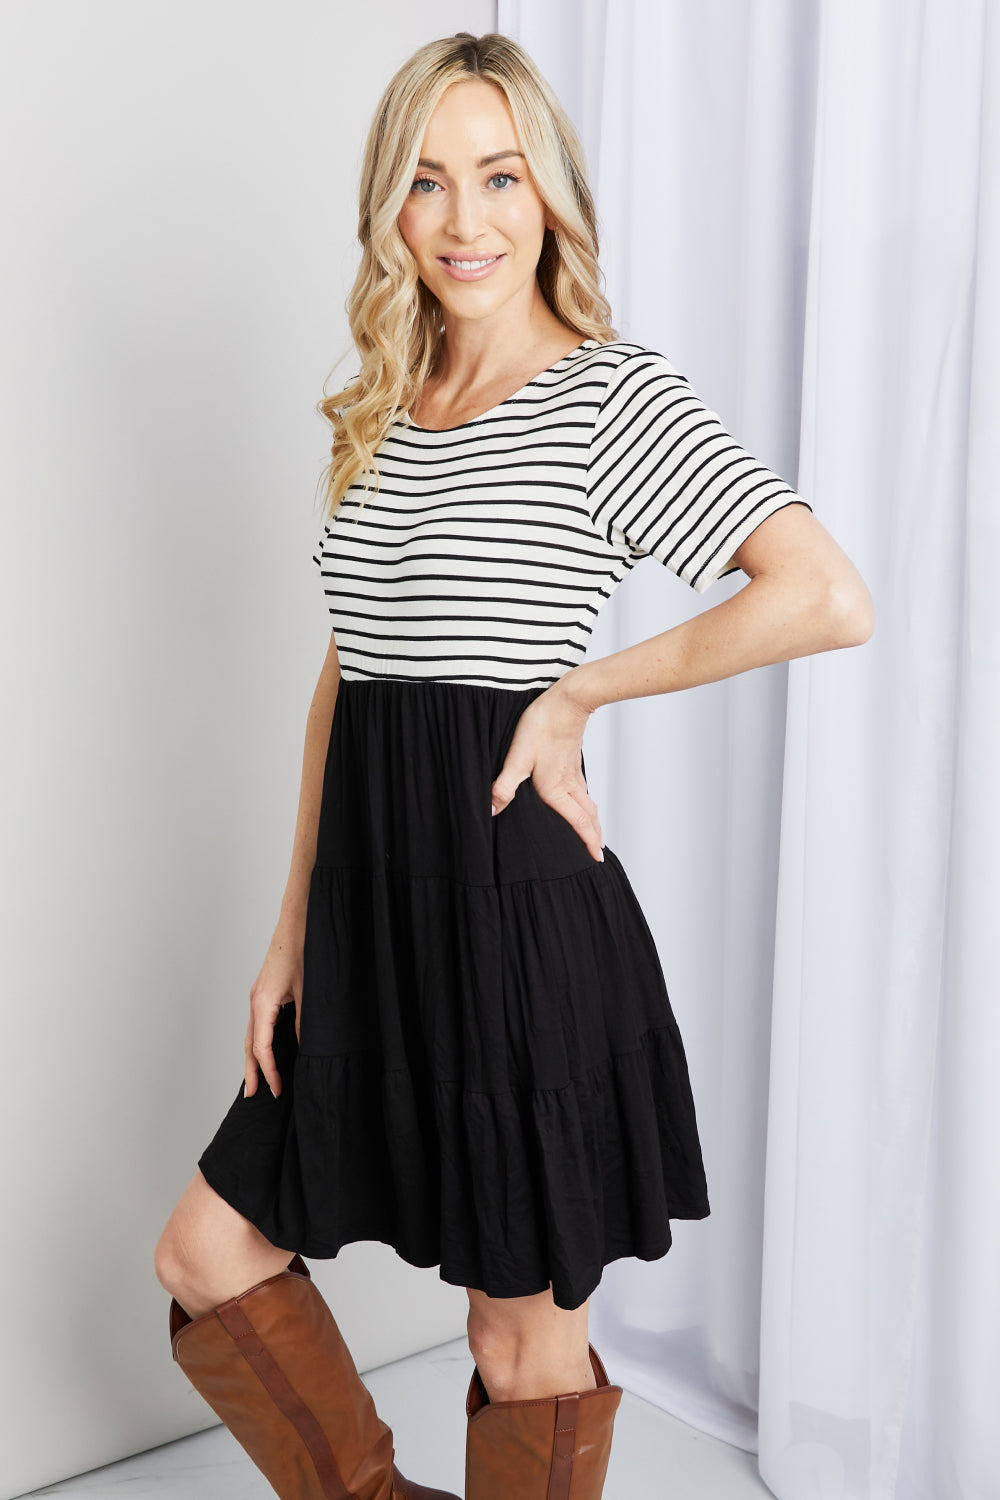 Call Me Cute Two-Tone Black & White Short Sleeve Spliced Dress